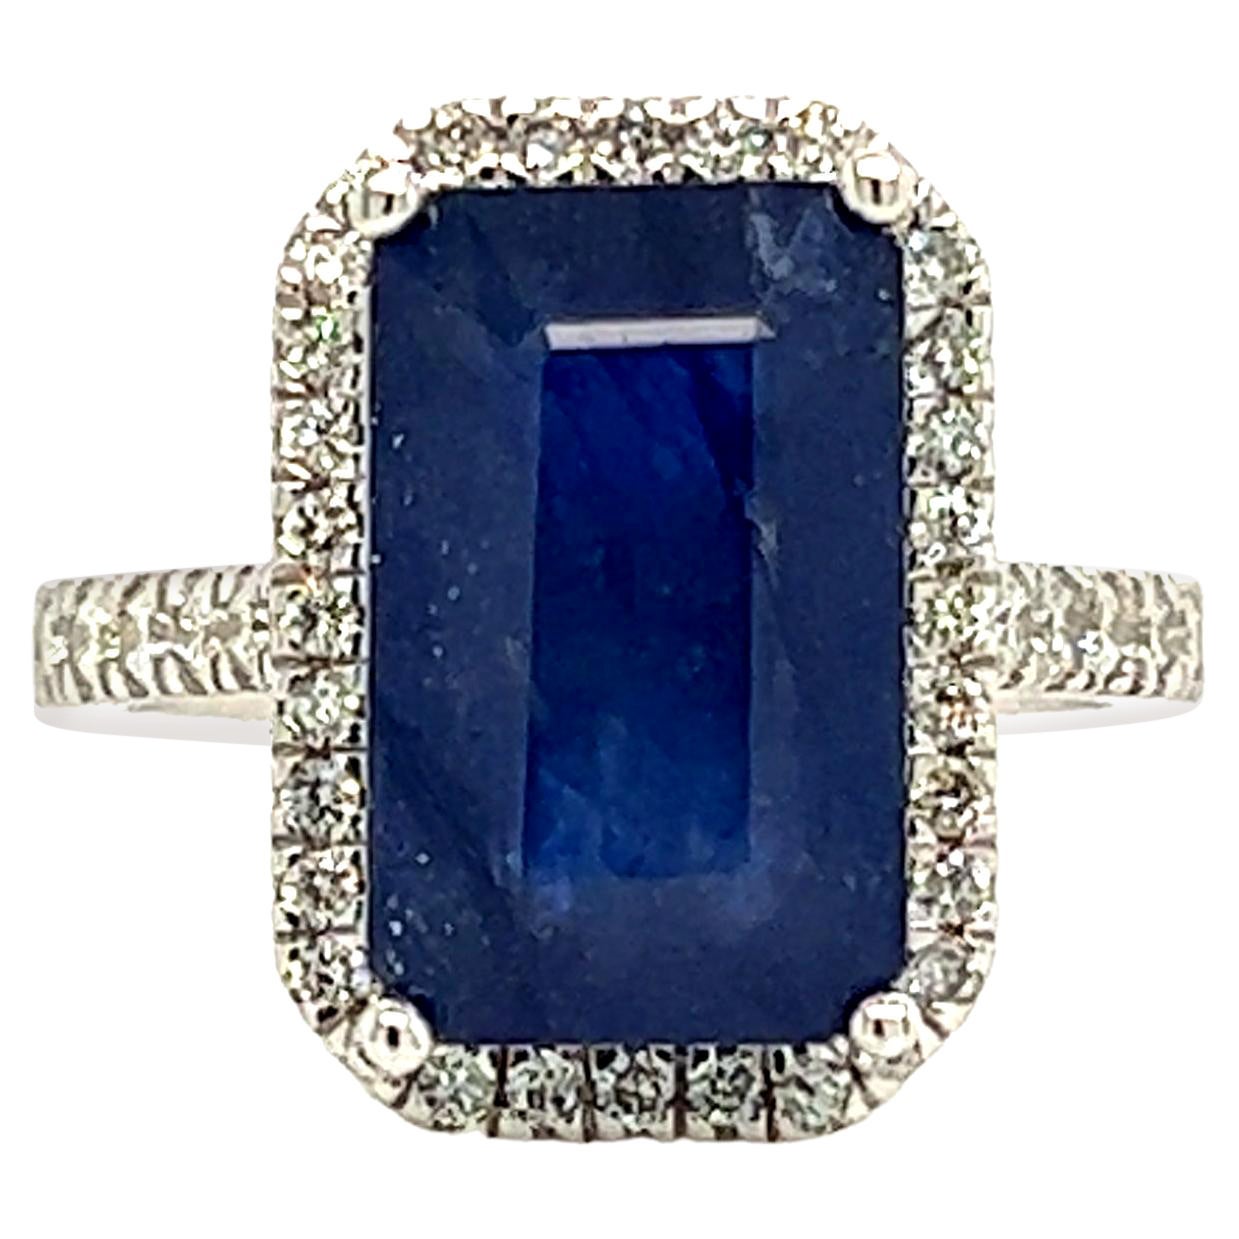 Sapphire Diamond Ring Size 6.25 14k Gold 6.84 TCW Certified